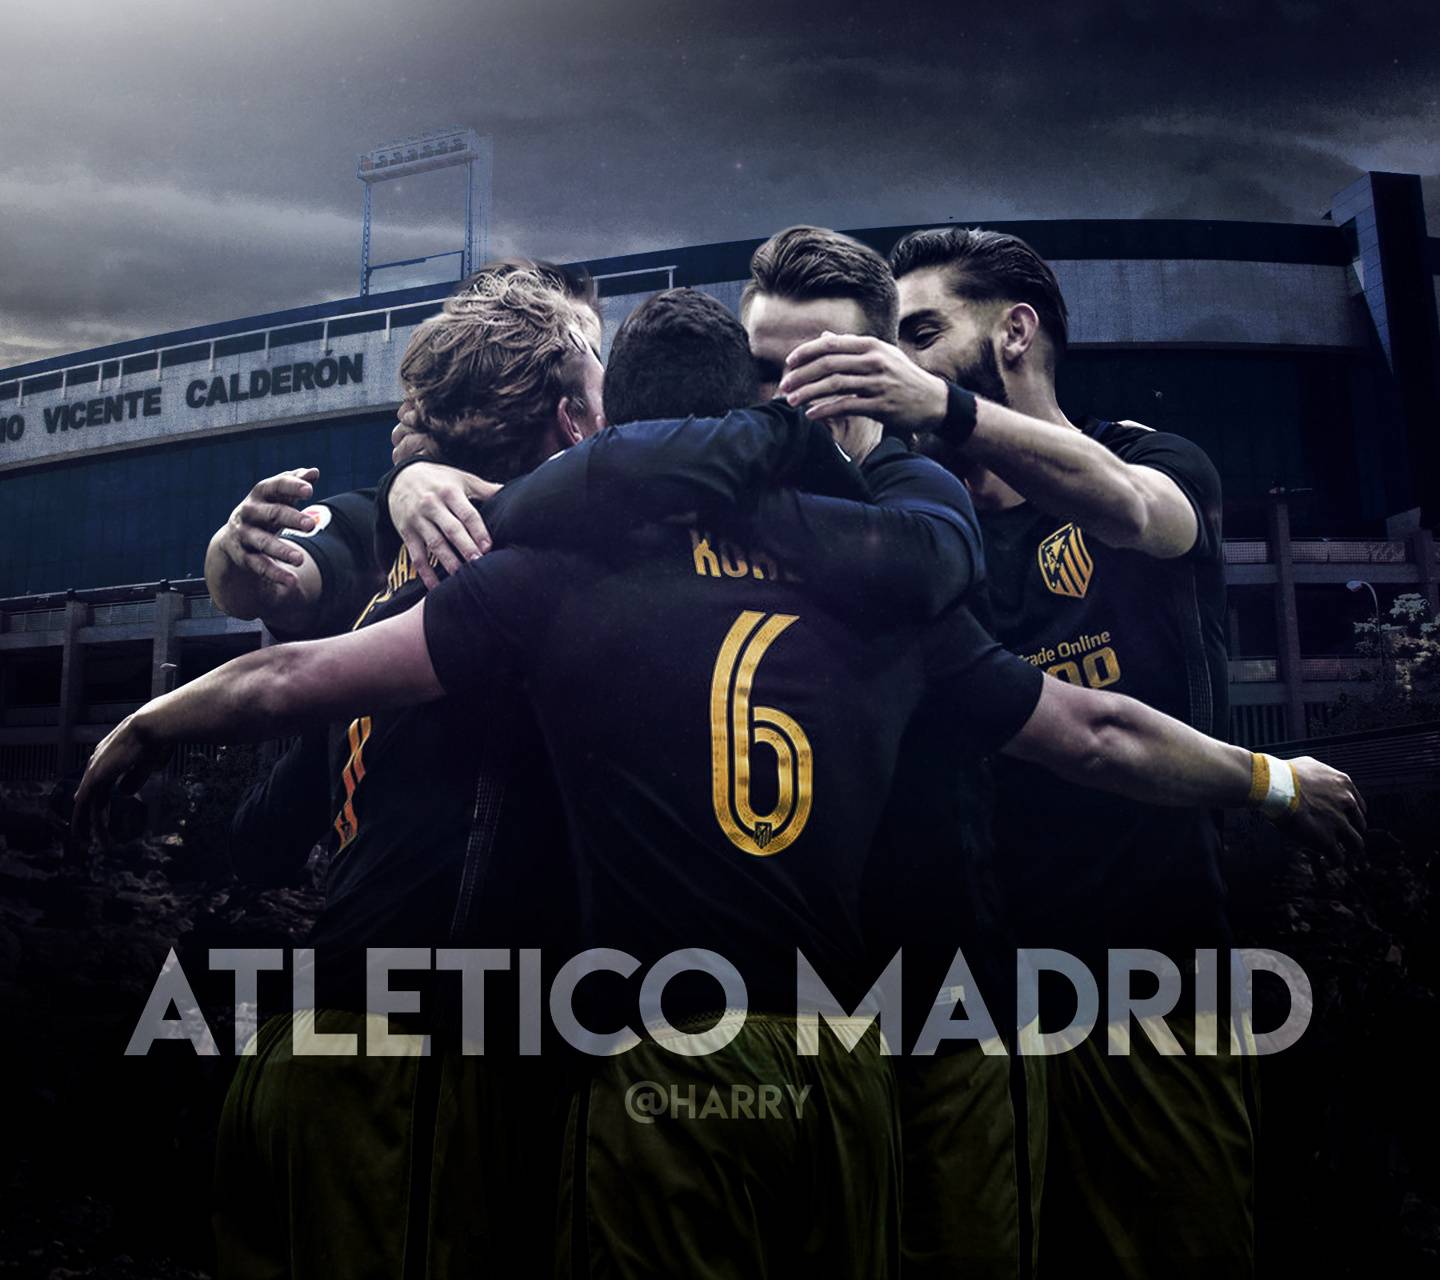 Atletico Madrid Wallpaper por harrycool15 - d9 - Gratis en ZEDGE ™